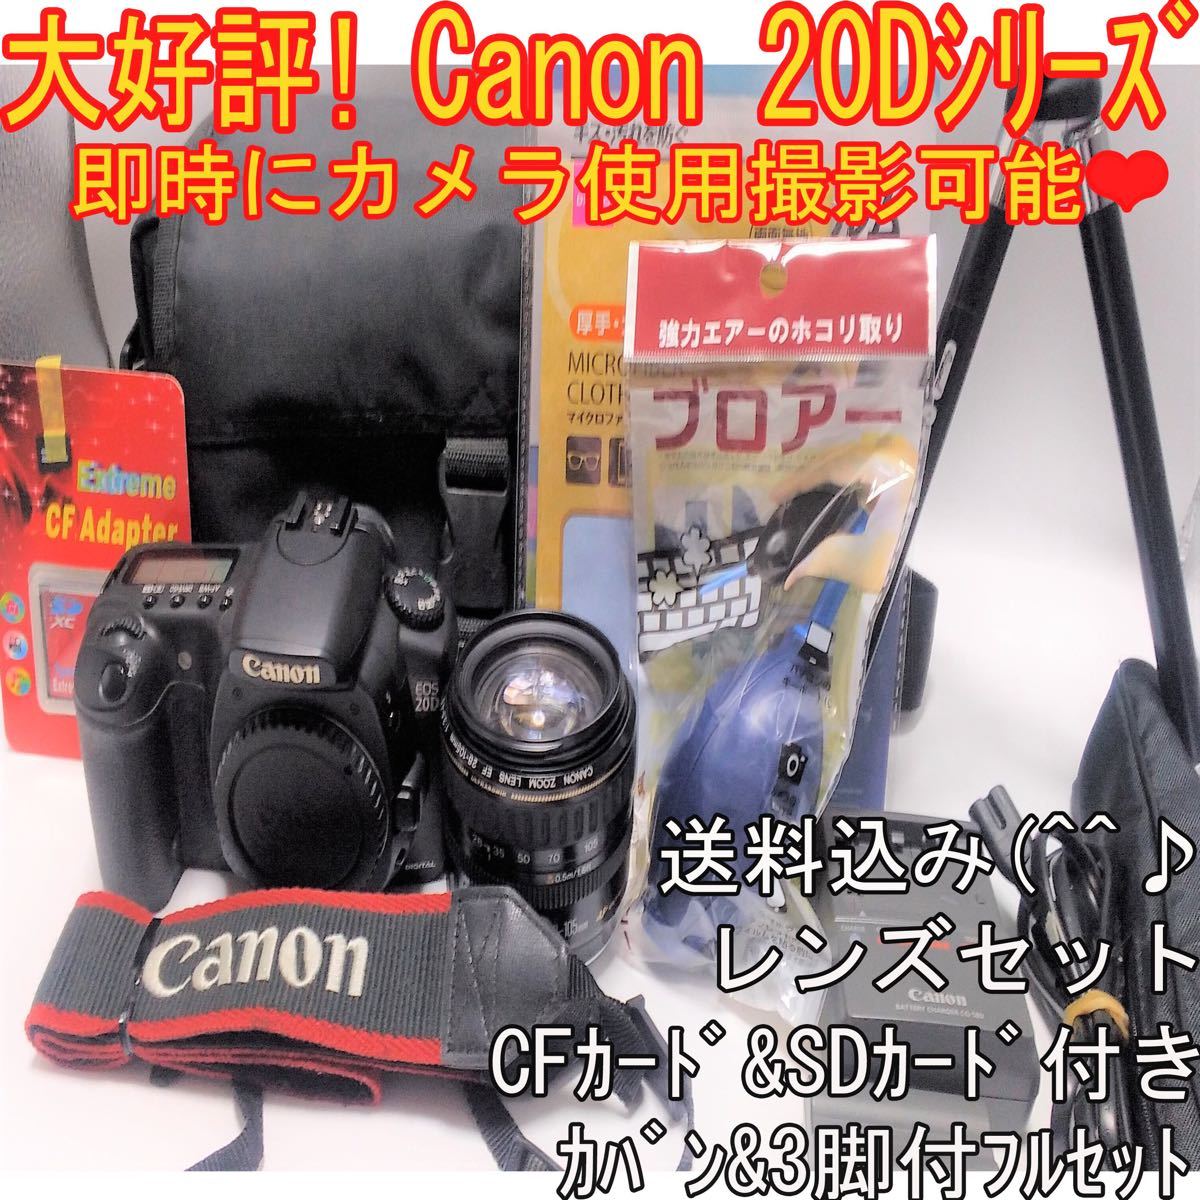 Canon EOS50D セット レンズ３本他 comonuevo.com.co